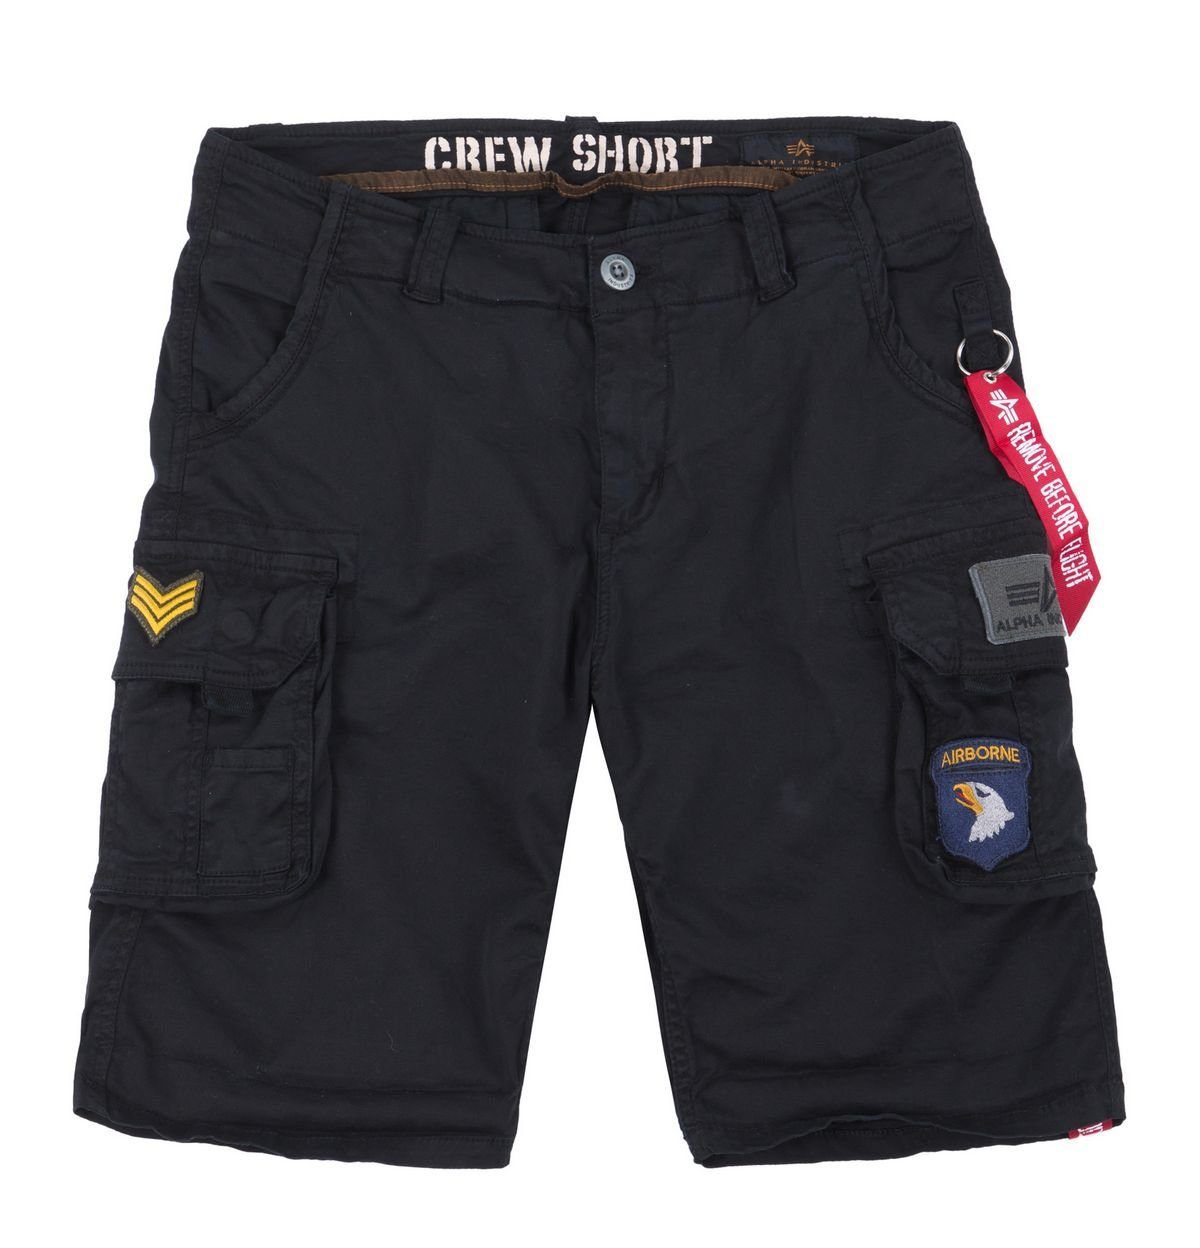 Crew Shorts Alpha Short Industries Patch black